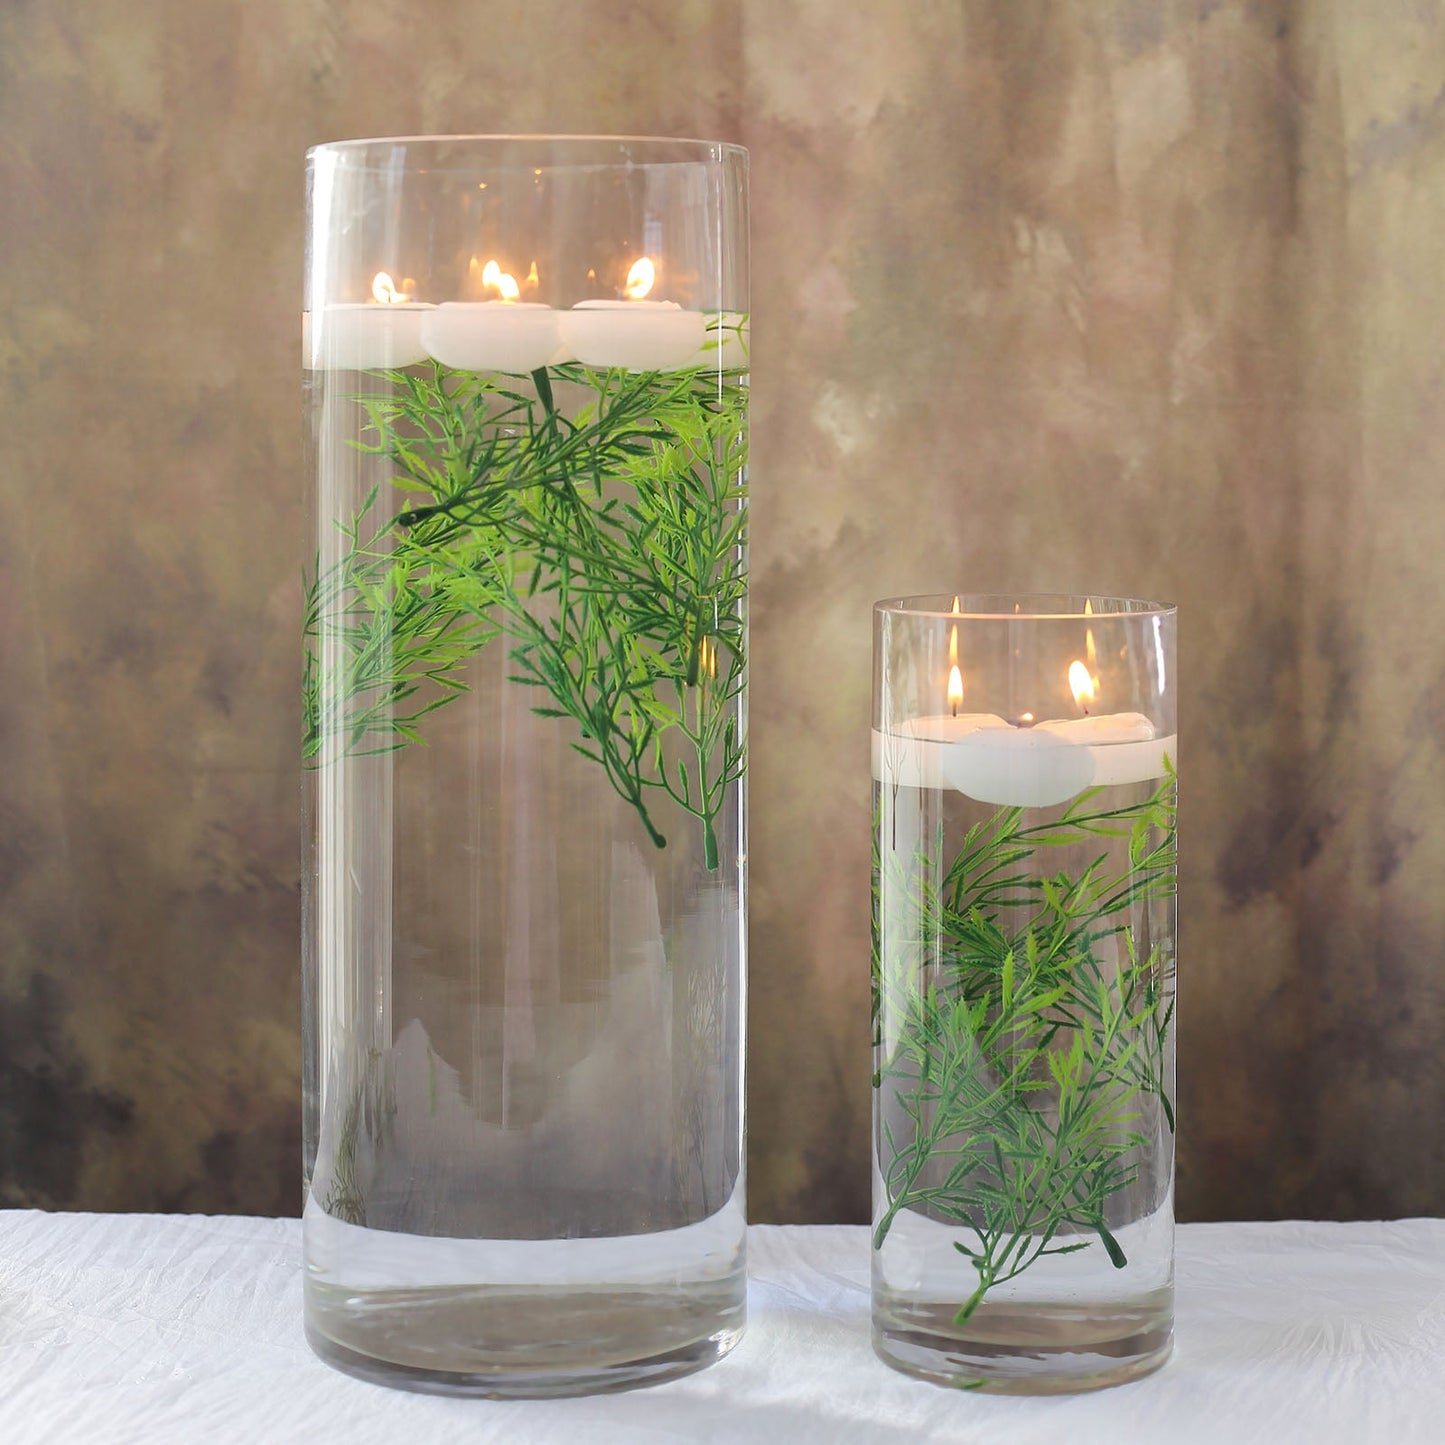 25 Pack Mini Green Artificial Fern Leaf Branch Stems, Flower Vase Filler For Floating Candle Centerpieces 6"